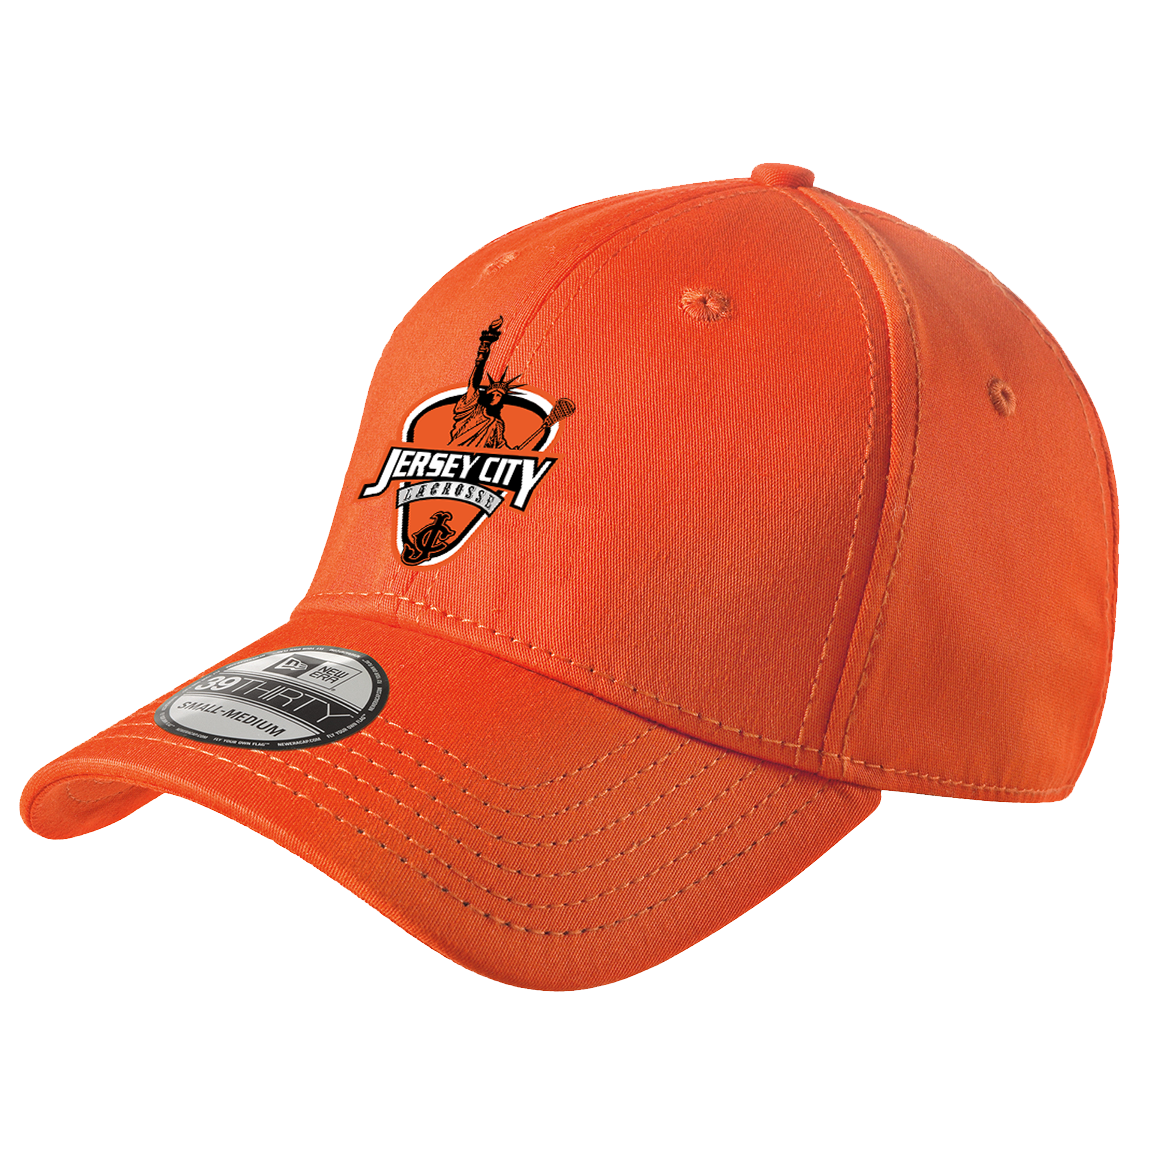 Jersey City Lacrosse New Era Structured Stretch Orange Cap Text Logo